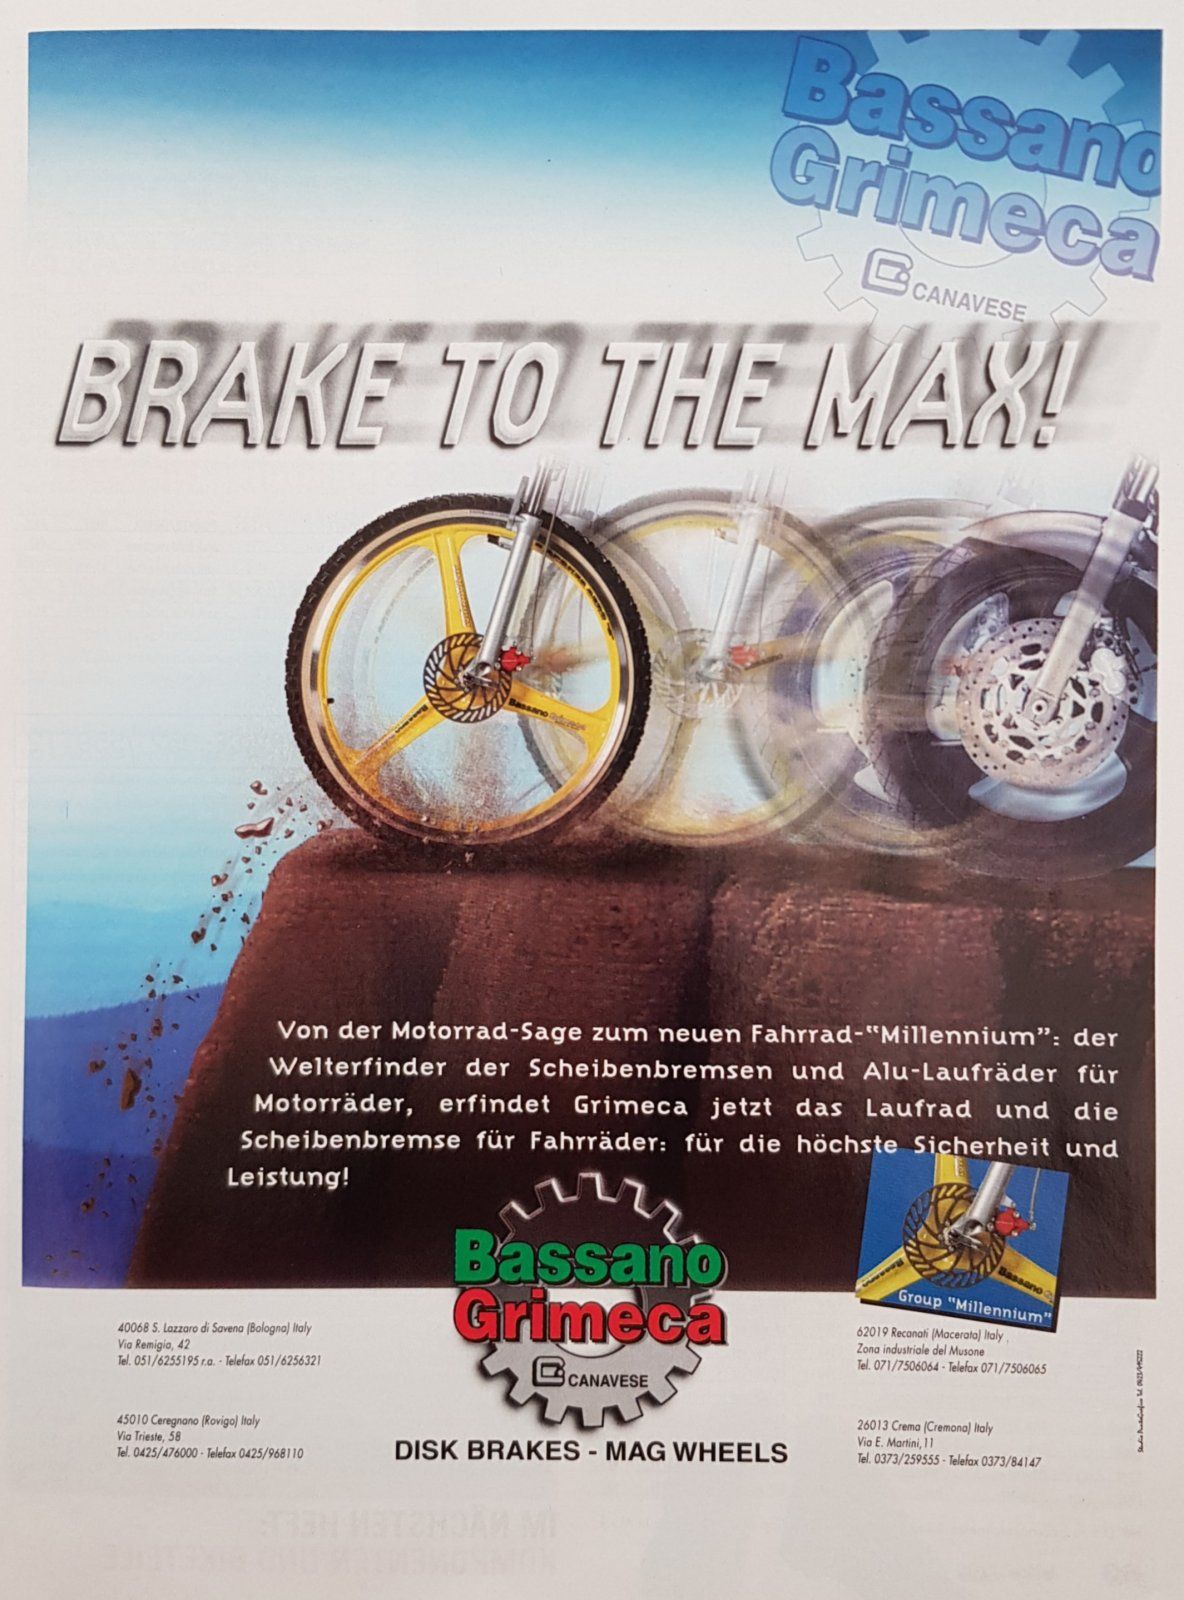 Grimeca Bassano Disk Brakes Ad aus Bike 2000.jpg